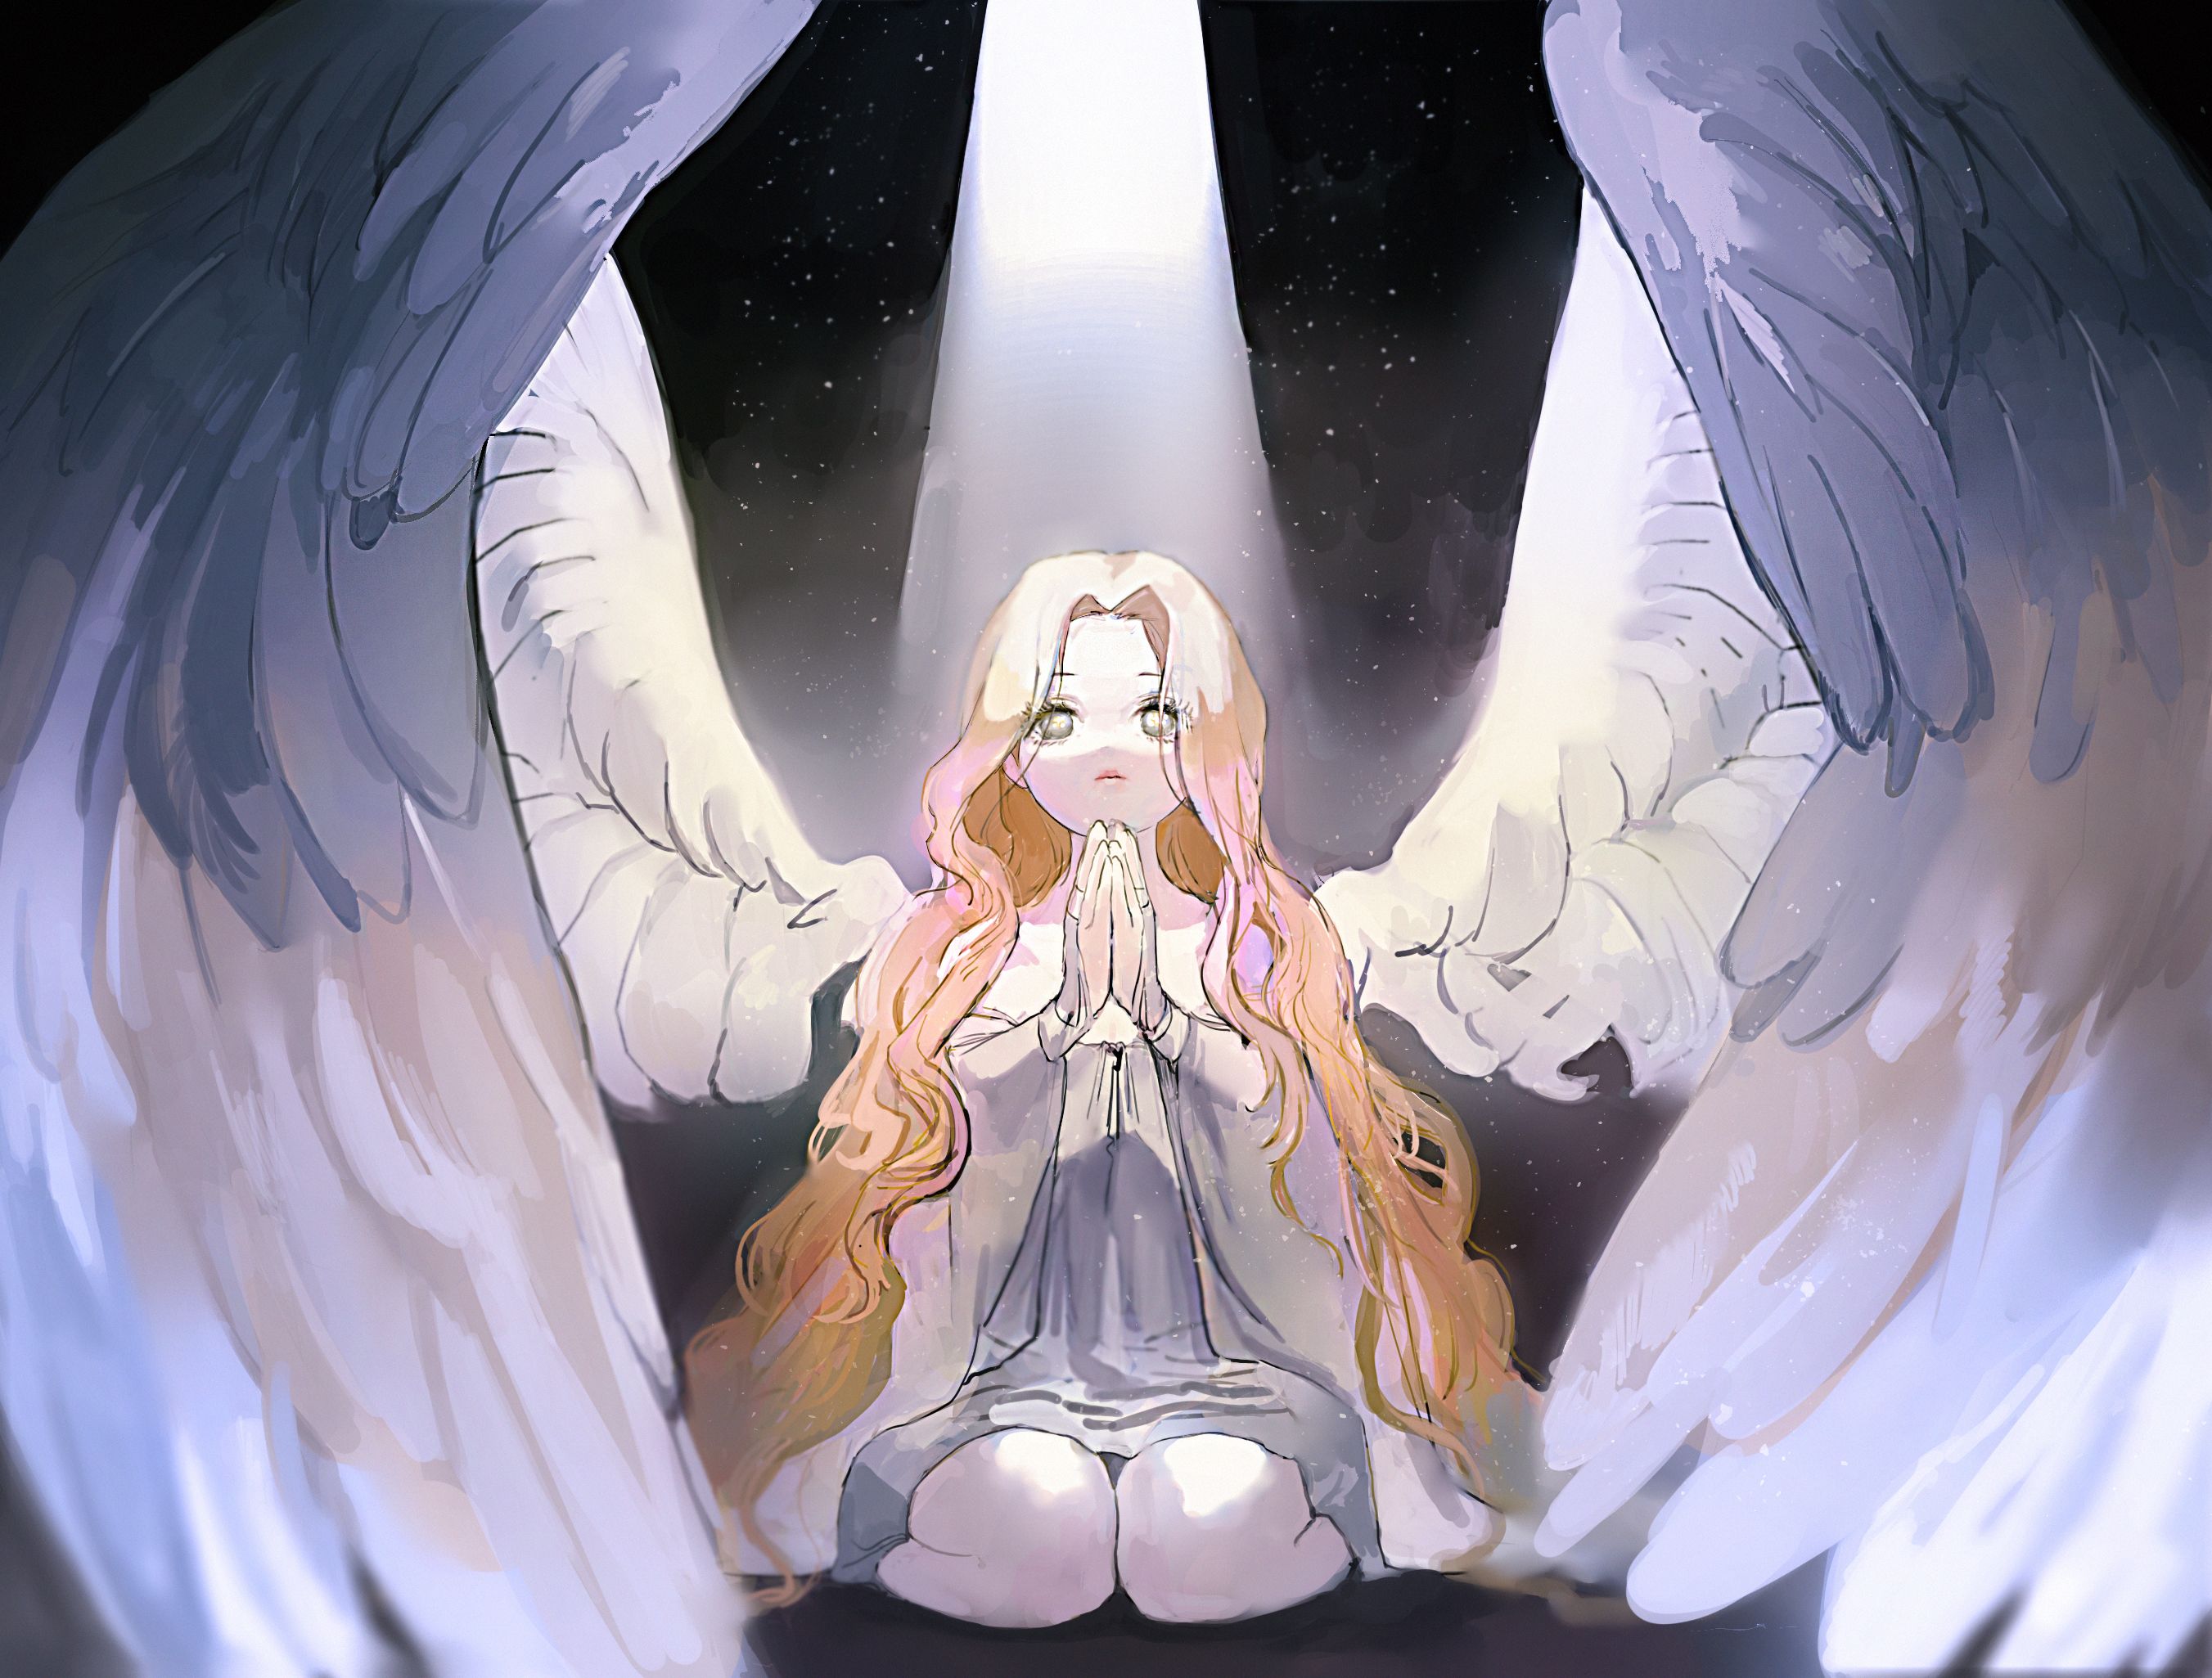 Oh God, manga Boy, fallen Angel, Anime music video, heaven, cg Artwork,  angel, cool, YouTube, manga | Anyrgb